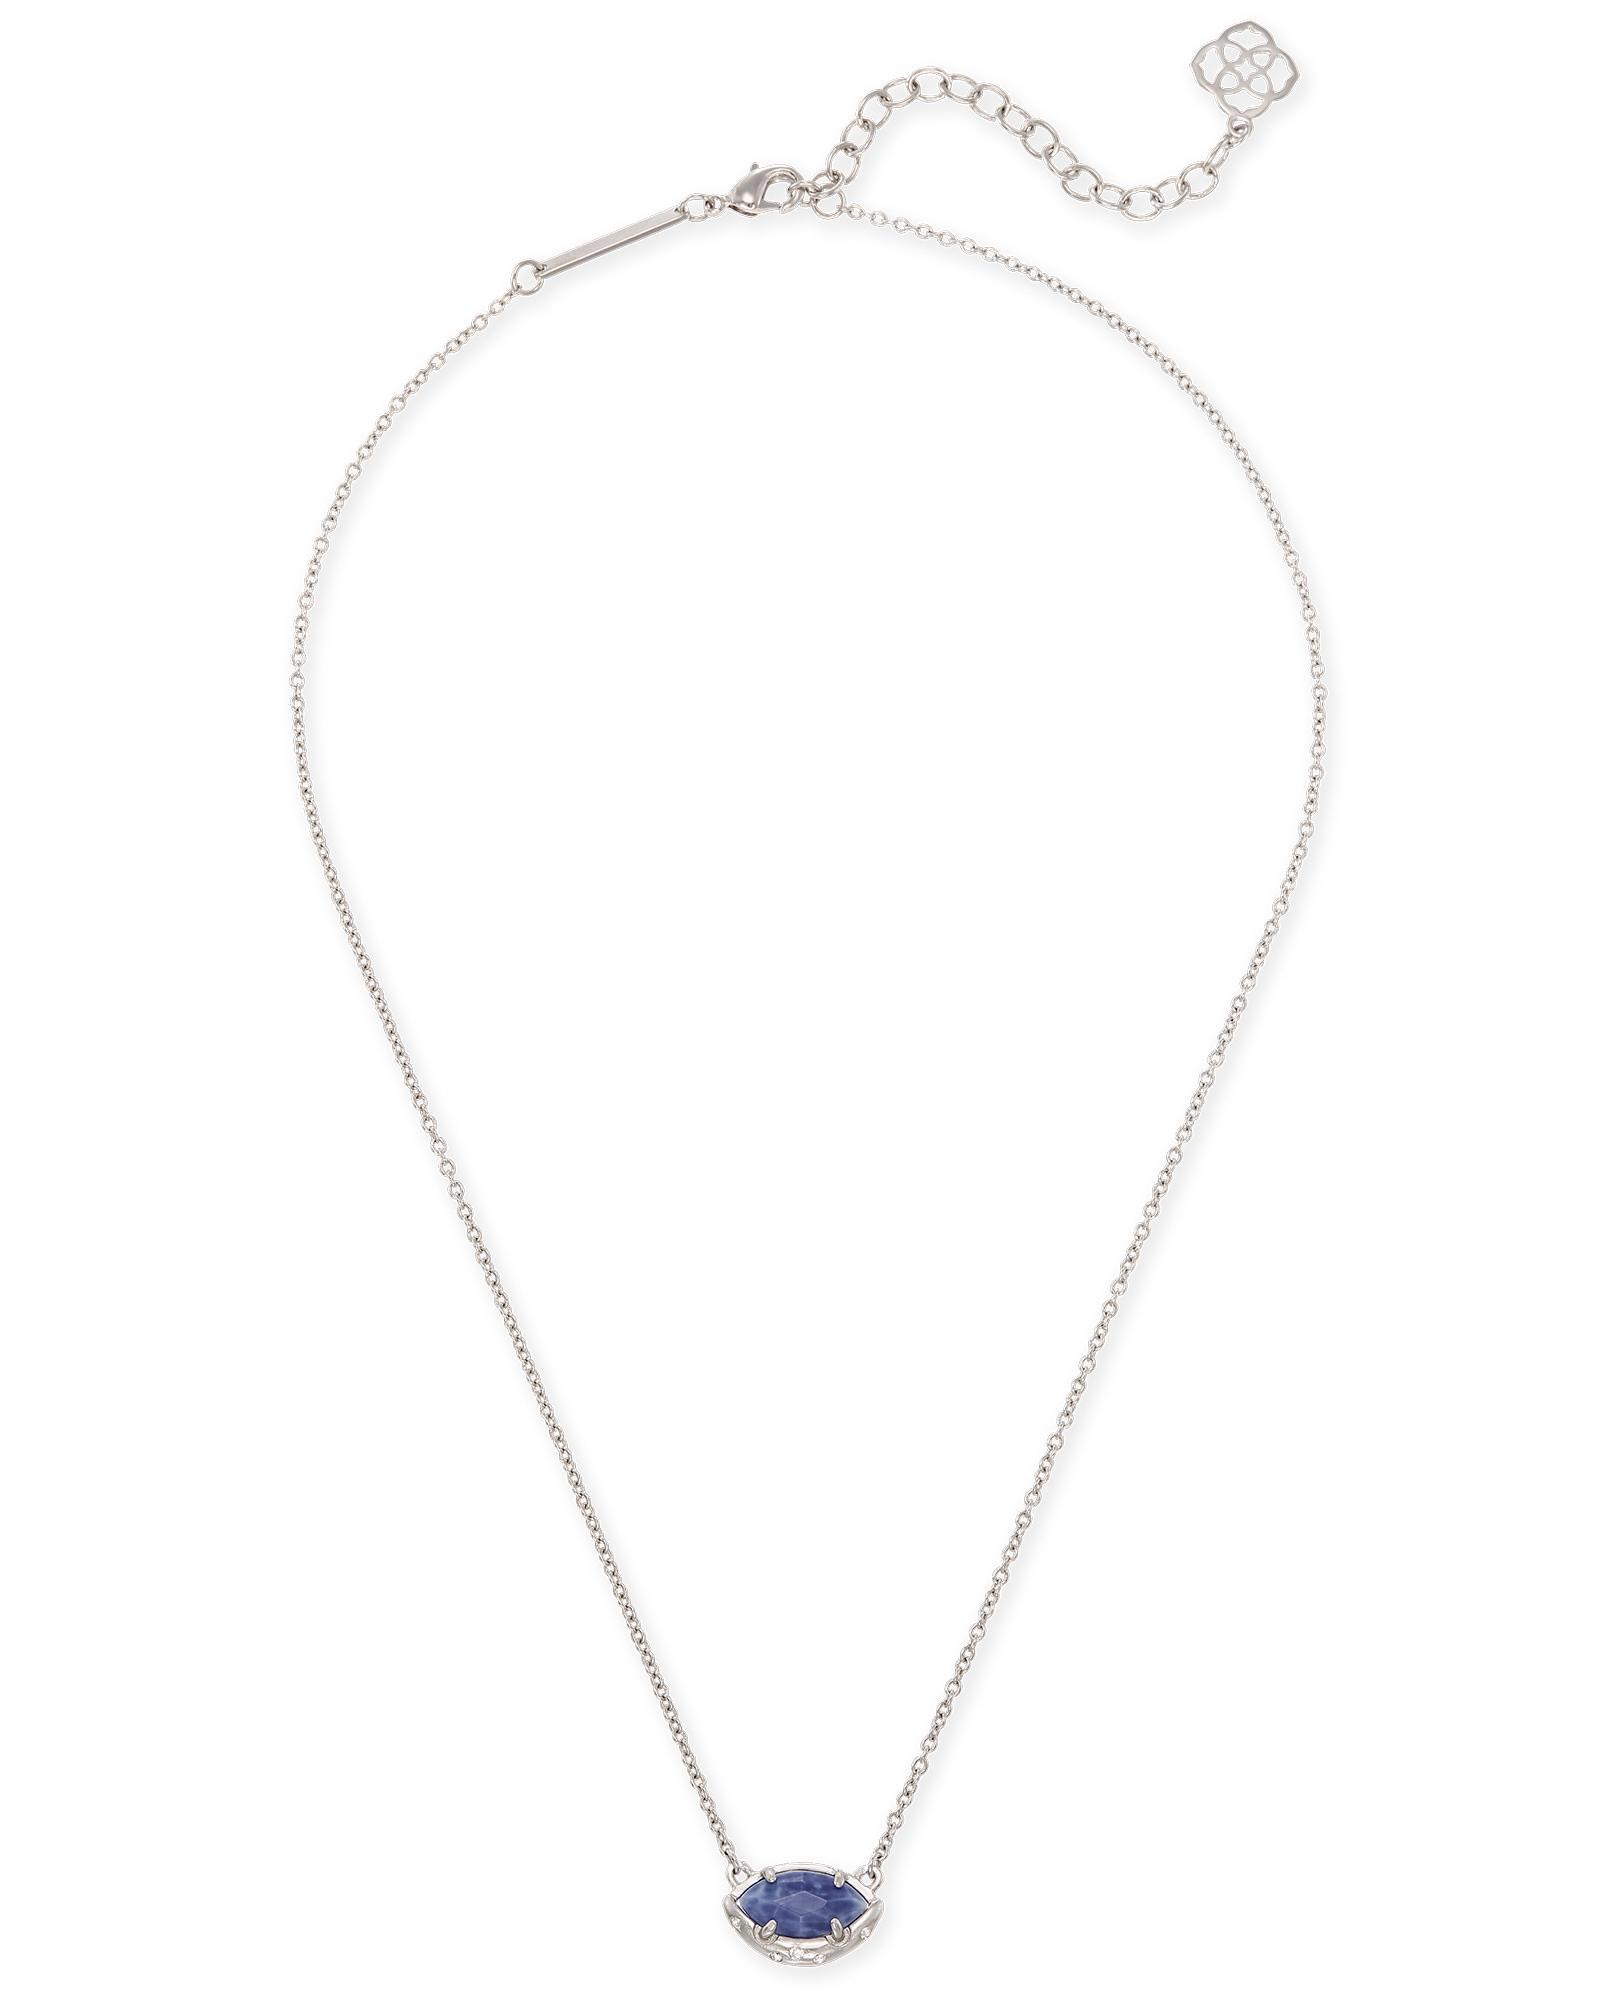 Mikka Silver Pendant Necklace in Blue Agate | Kendra Scott